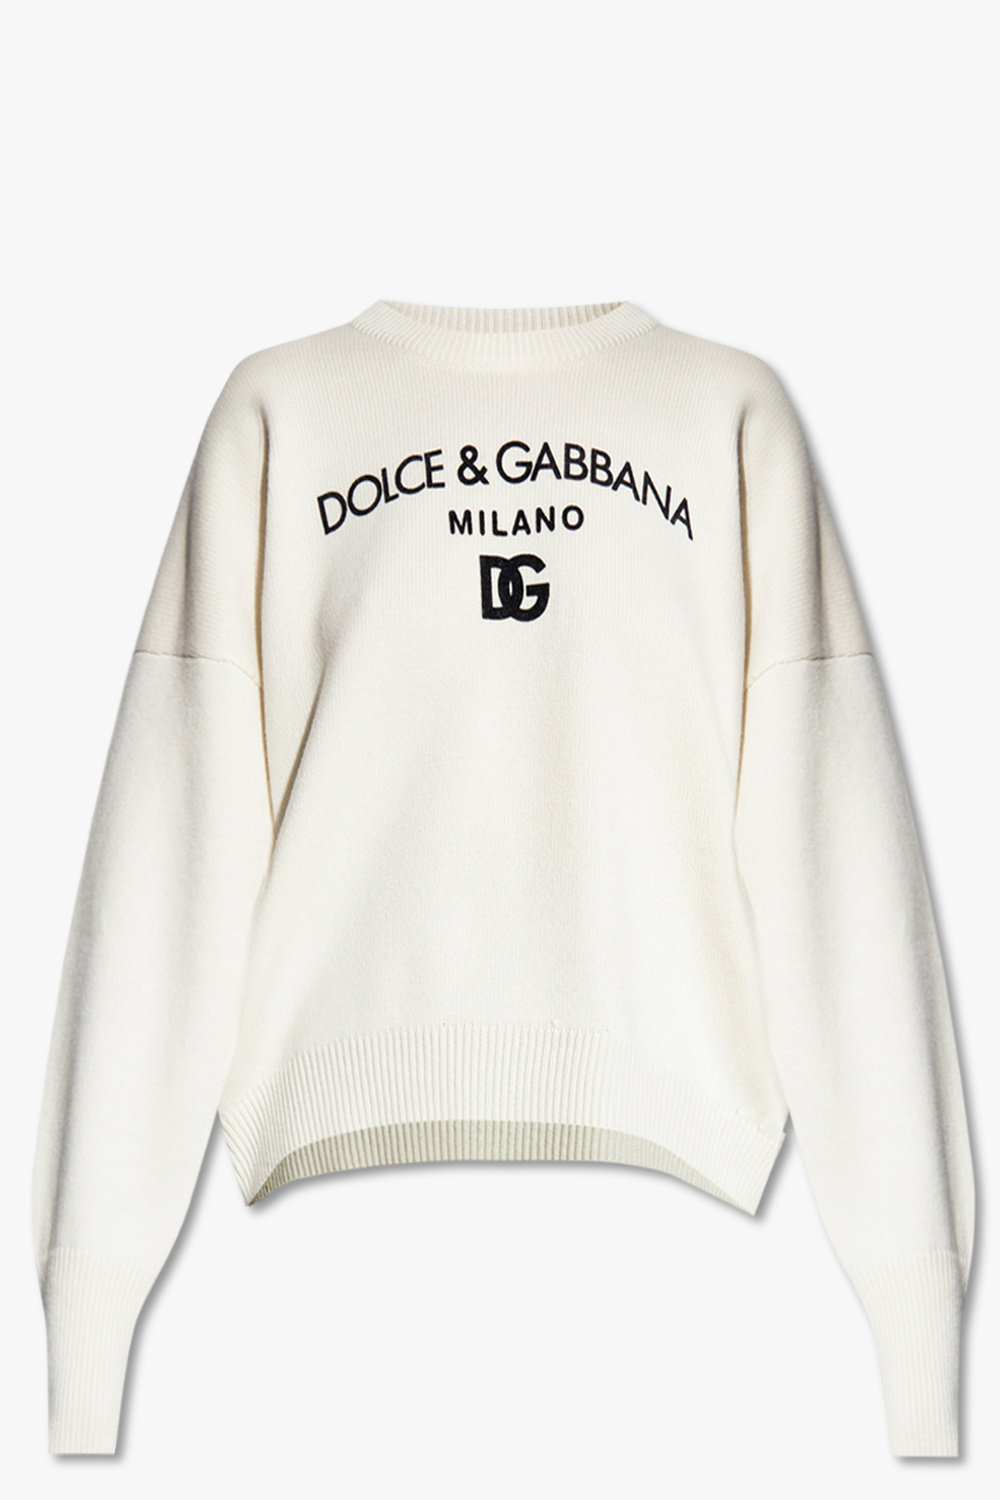 Cream 'Sicily Small' shoulder bag Dolce & Gabbana - Vitkac Spain